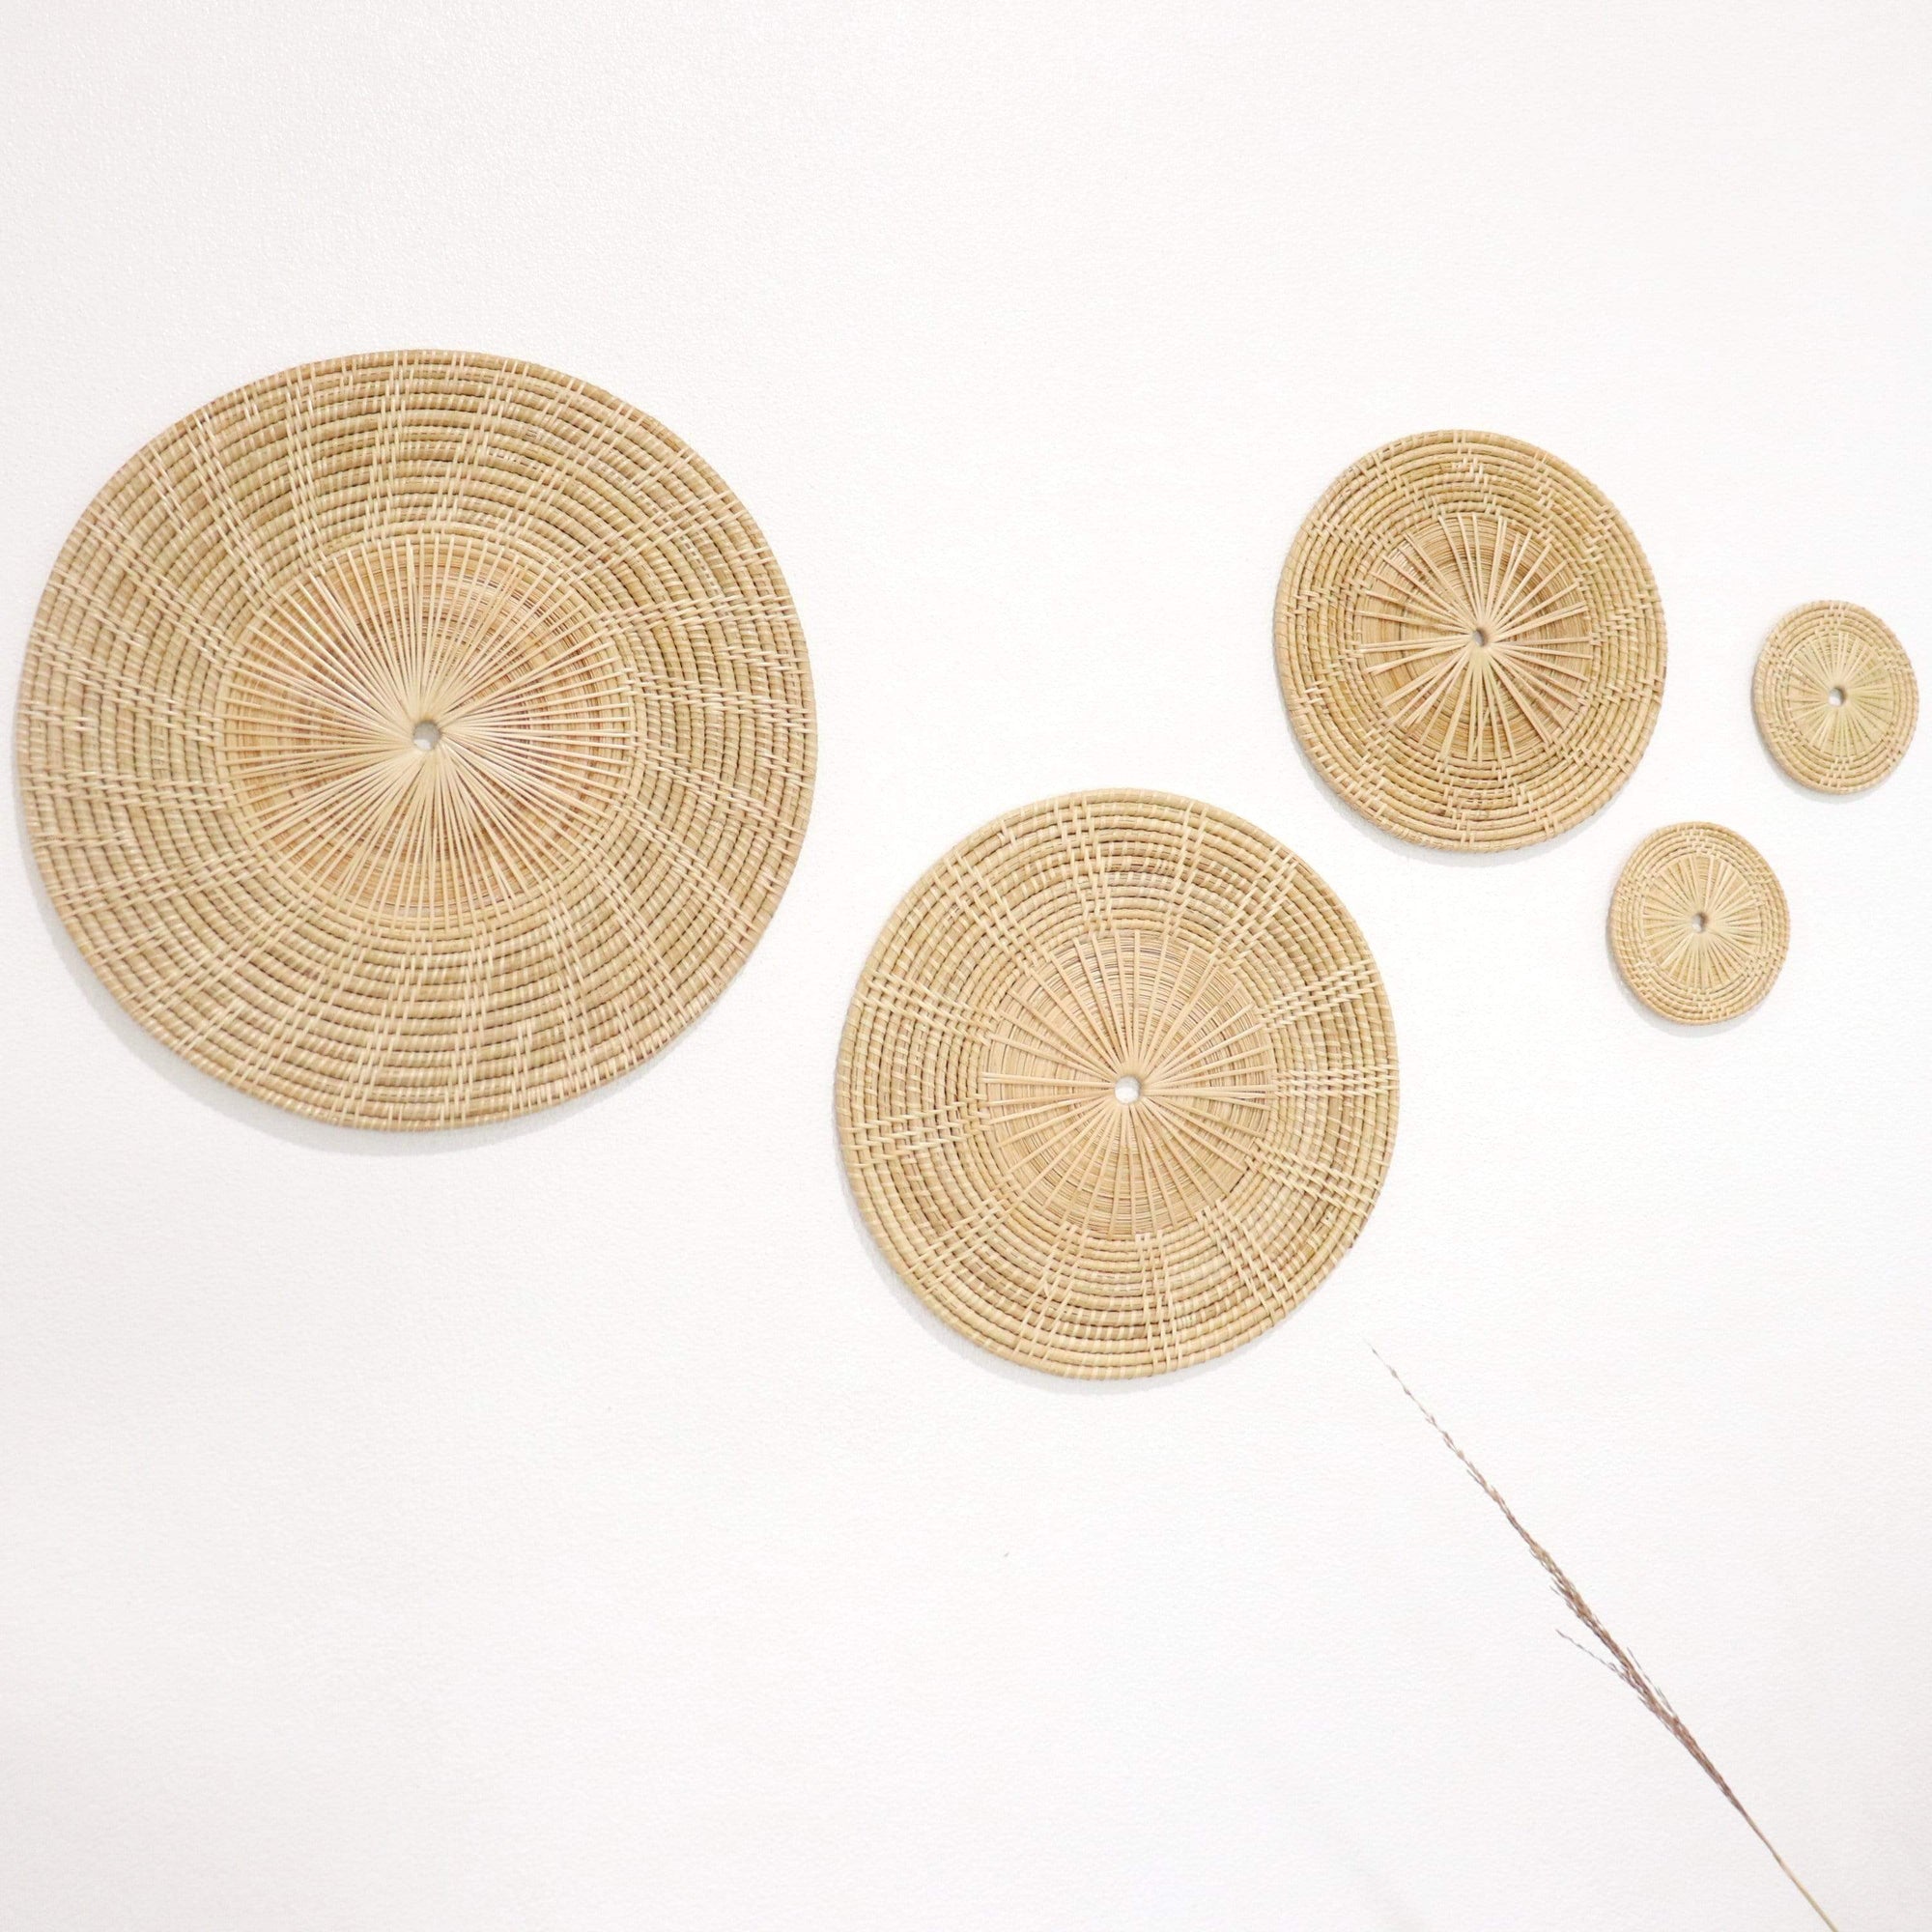 WARRADA - Rattan Wall Decor Set - Bohemian Style Hanging Baskets (5 Piece)